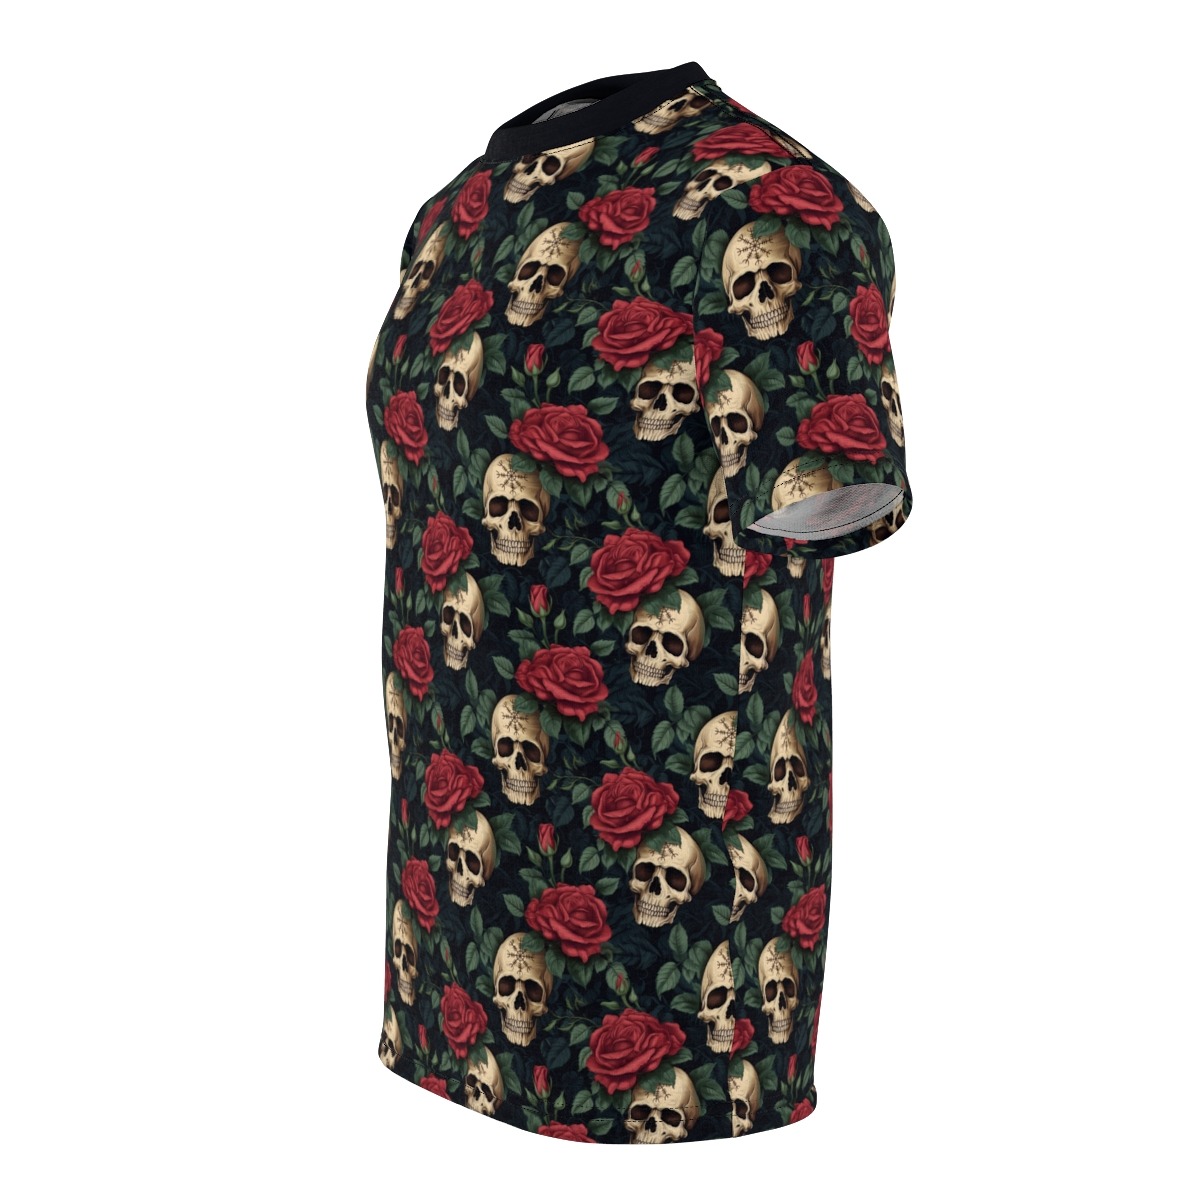 Helm Of Awe Roses & Skulls All Over Print Unisex T-Shirt